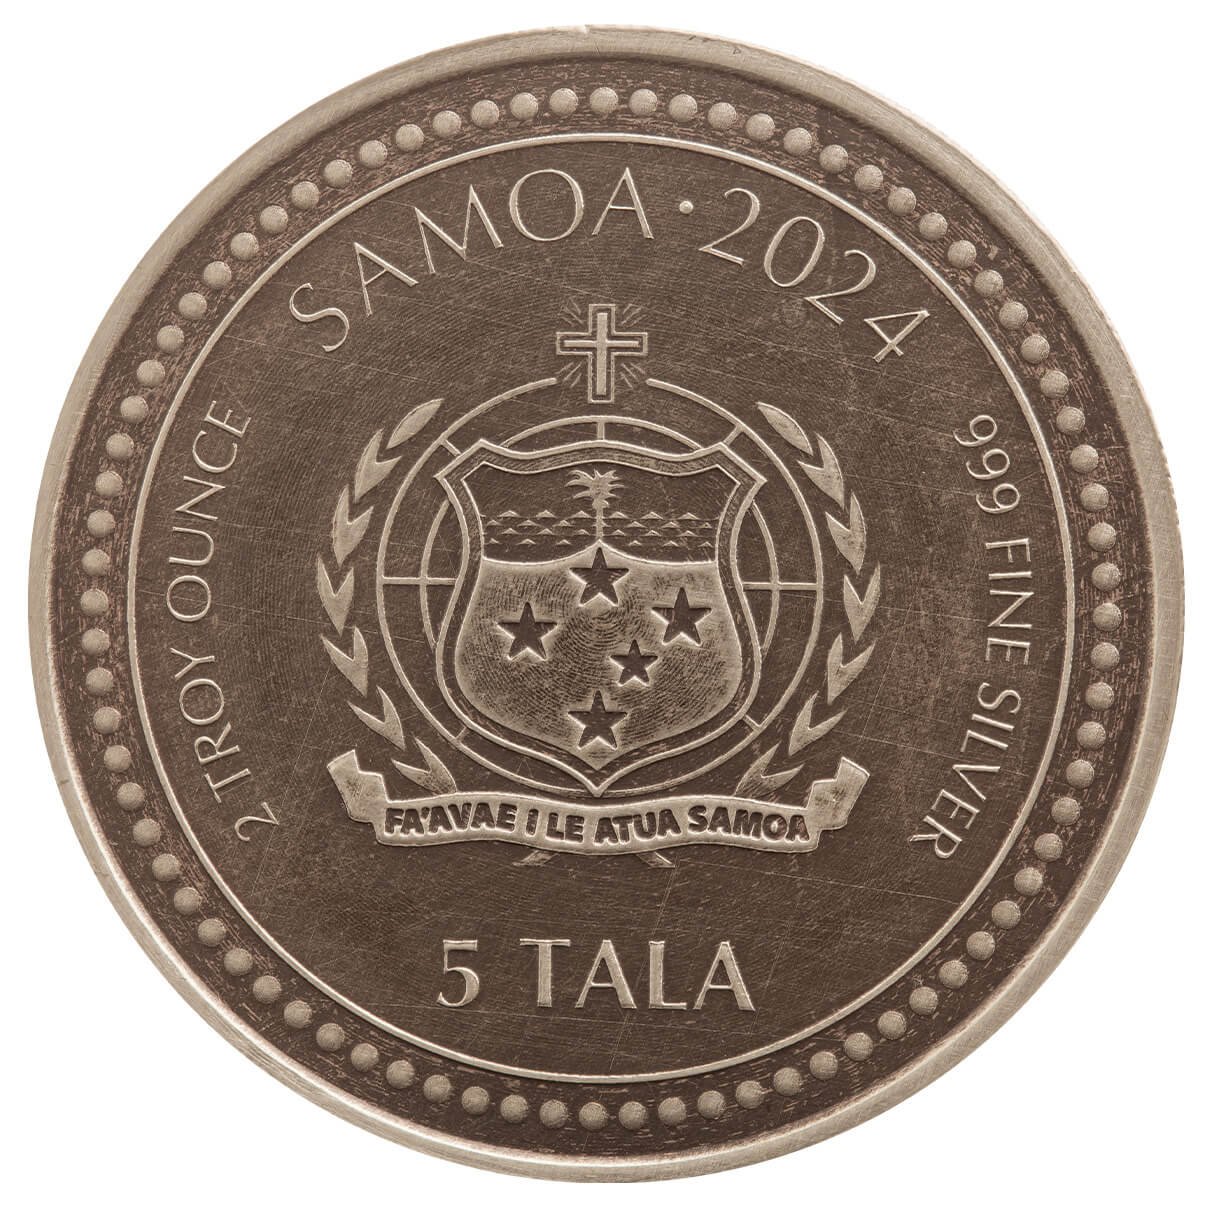 Монеты Самоа. Монеты серебро Самоа. Монета Самоа Экспедиция Тигрис.